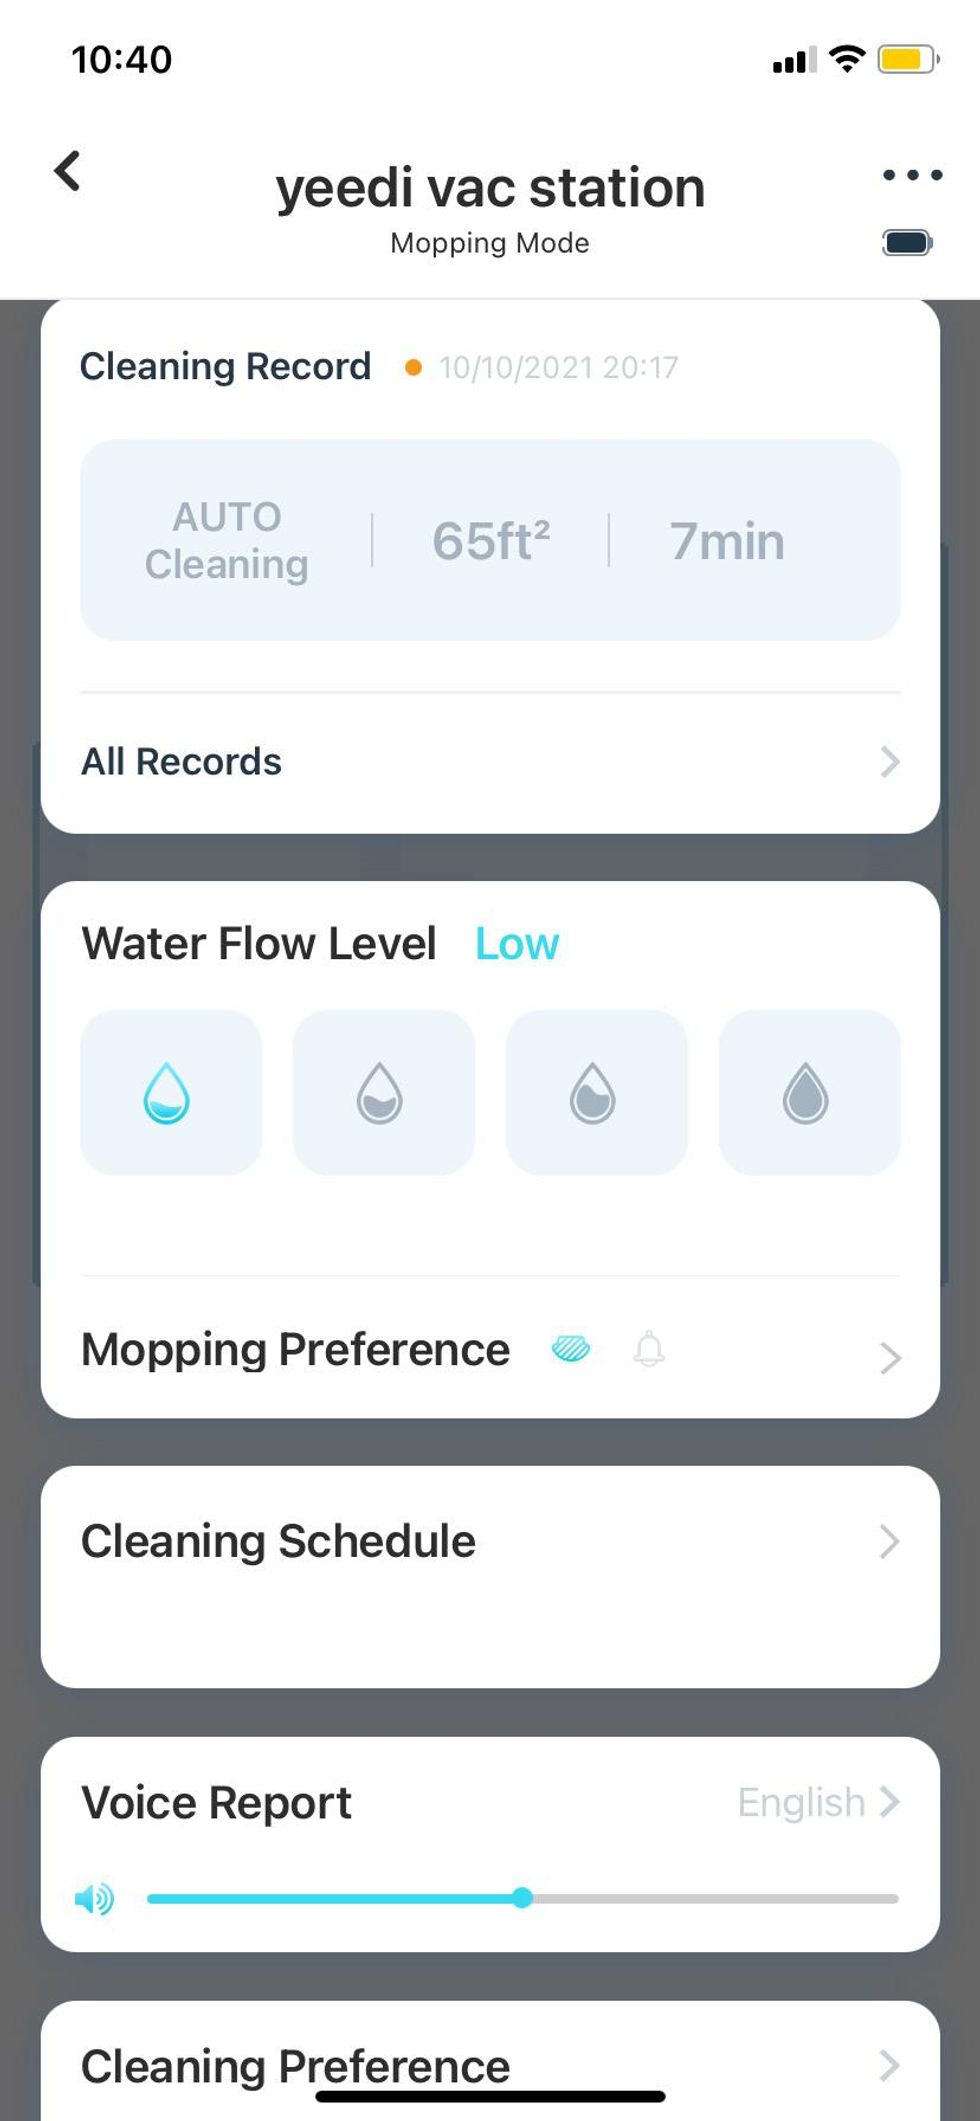 Yeedi app for mopping controls.